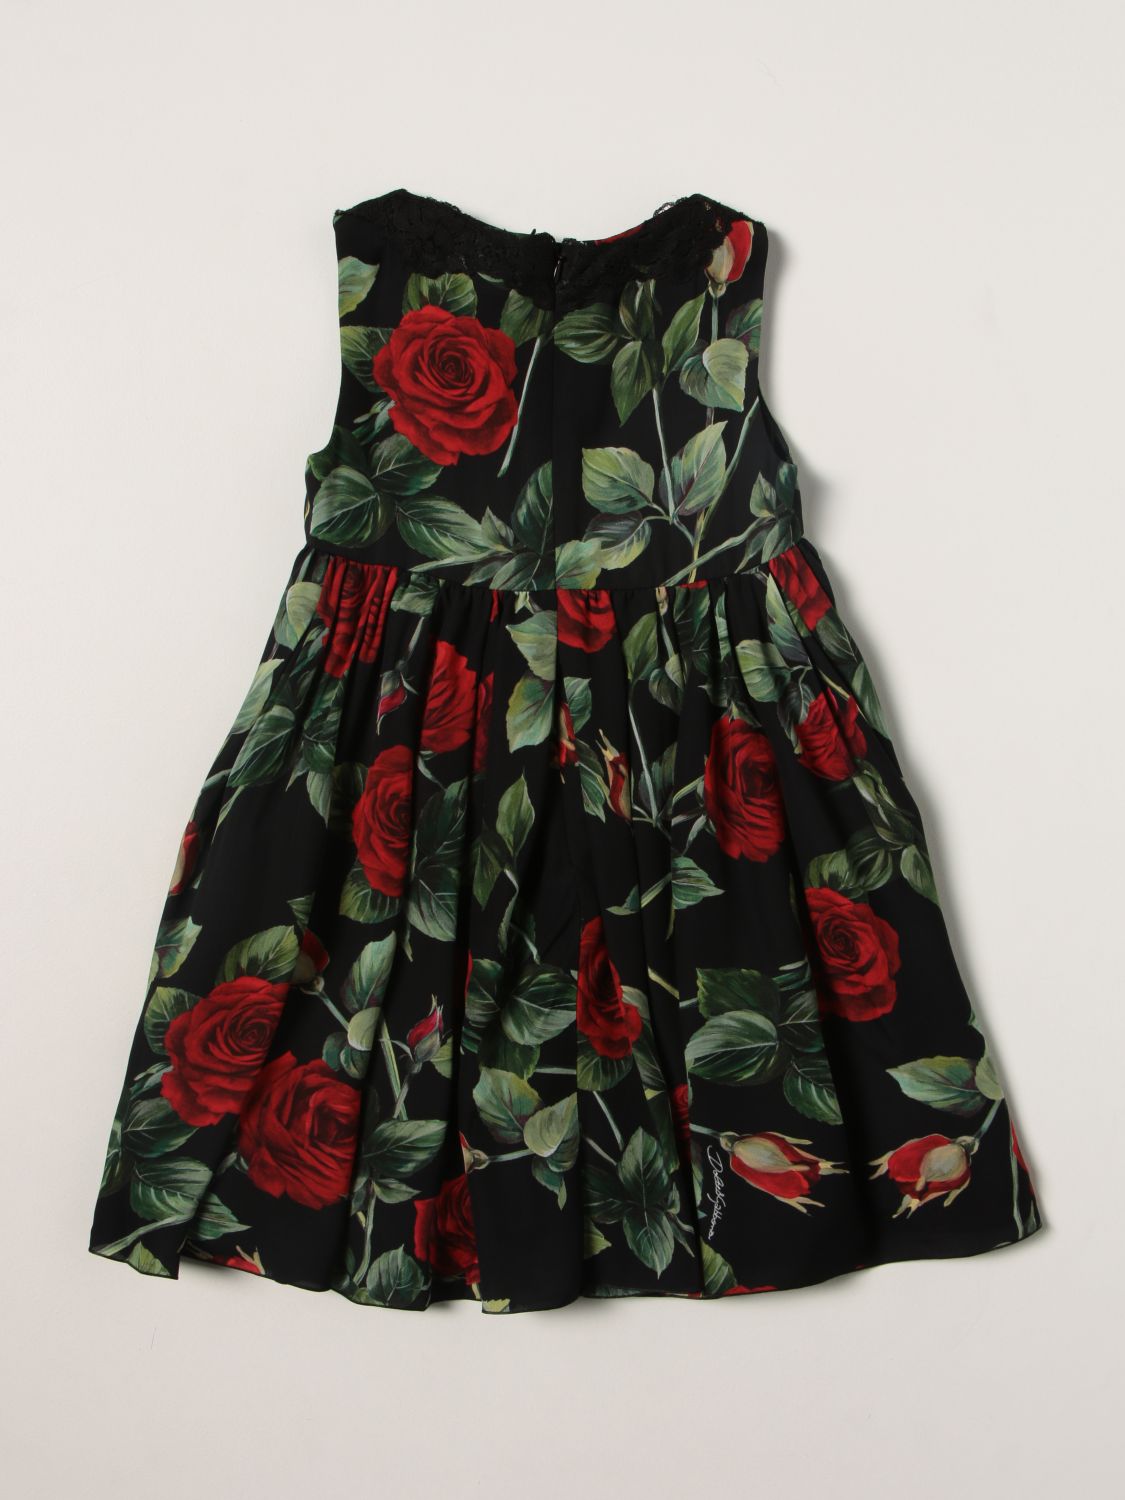 DOLCE & GABBANA: rose patterned dress - Black | Dolce & Gabbana dress  L52DX4 FS8CR online on 